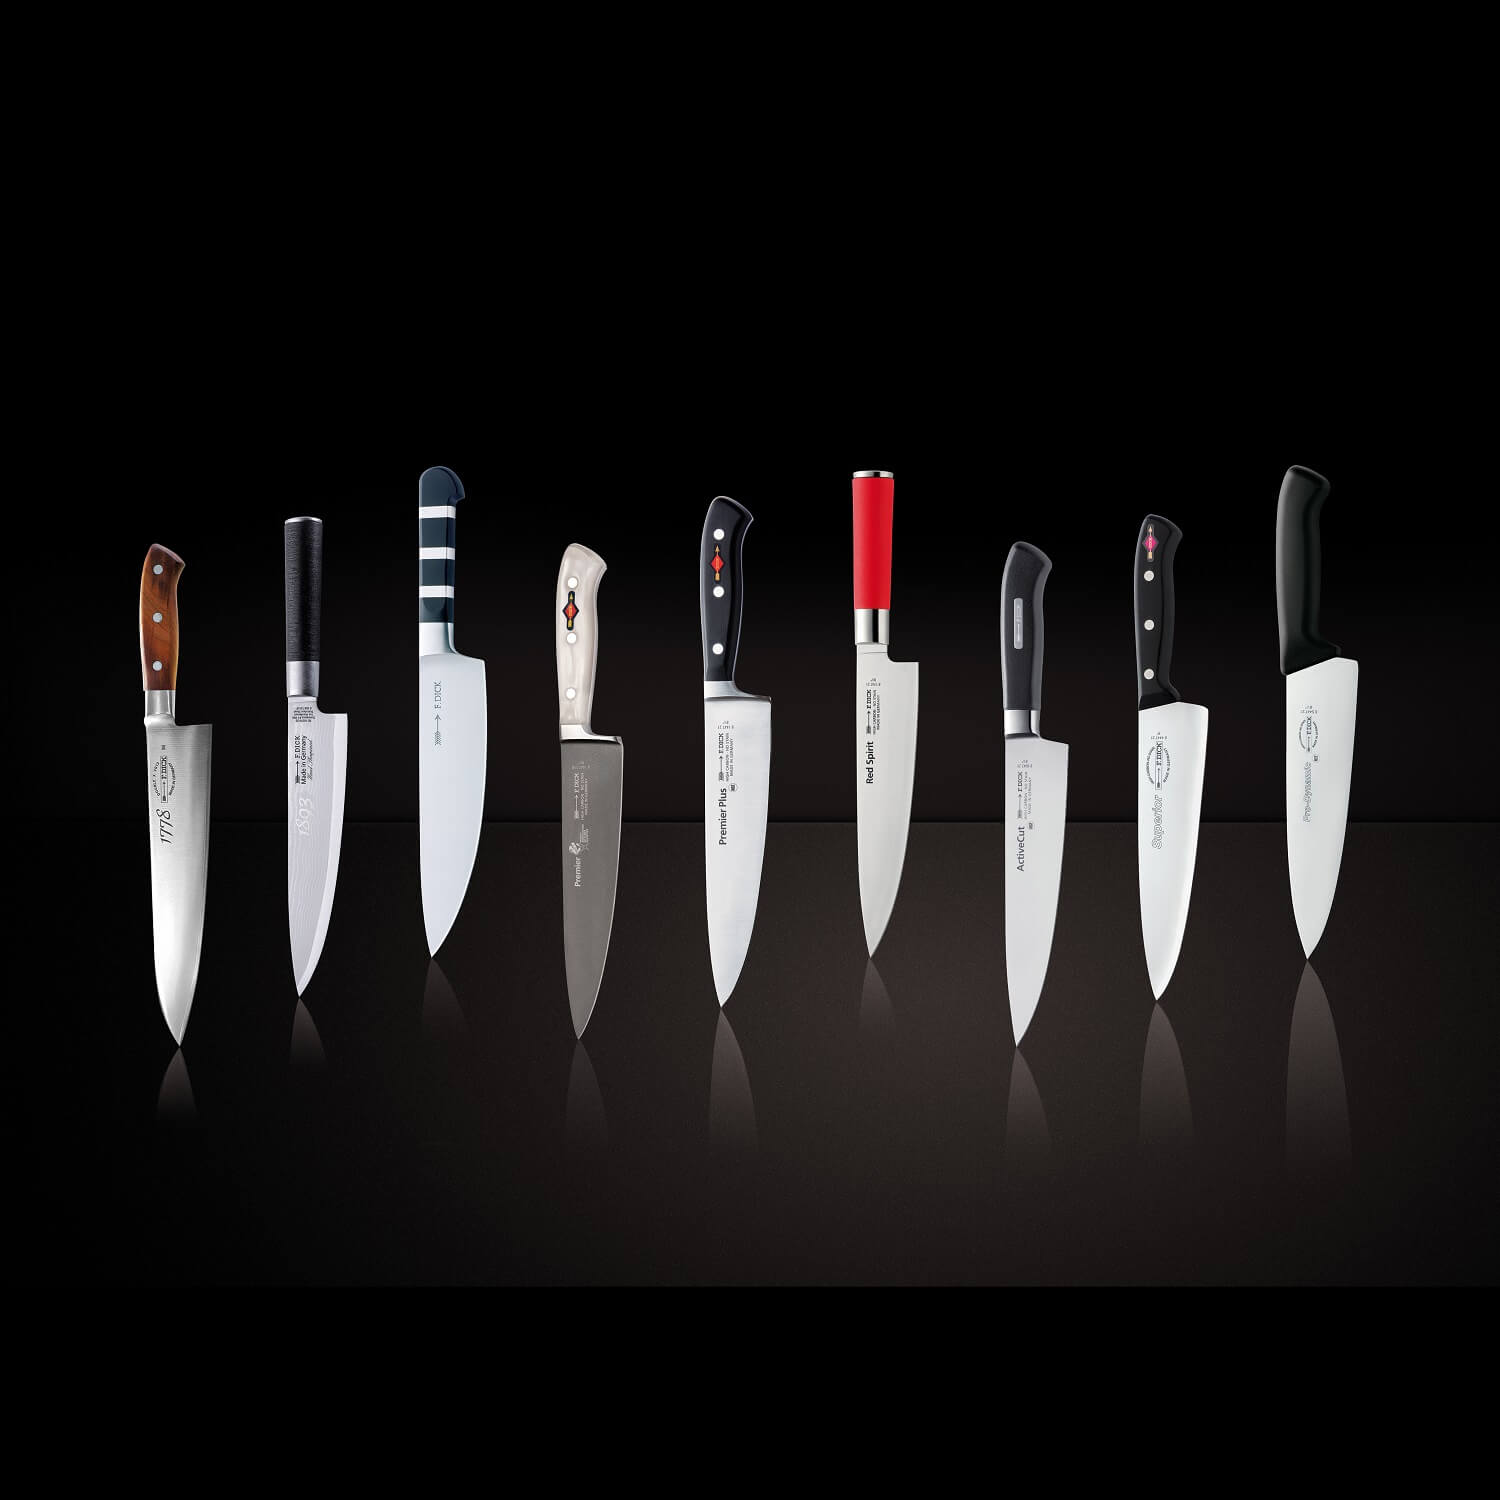 Ножи dick. Нож Miyabi 5000 dp. Нож dick 8288113. Кухонный нож. Набор ножей для кухни.